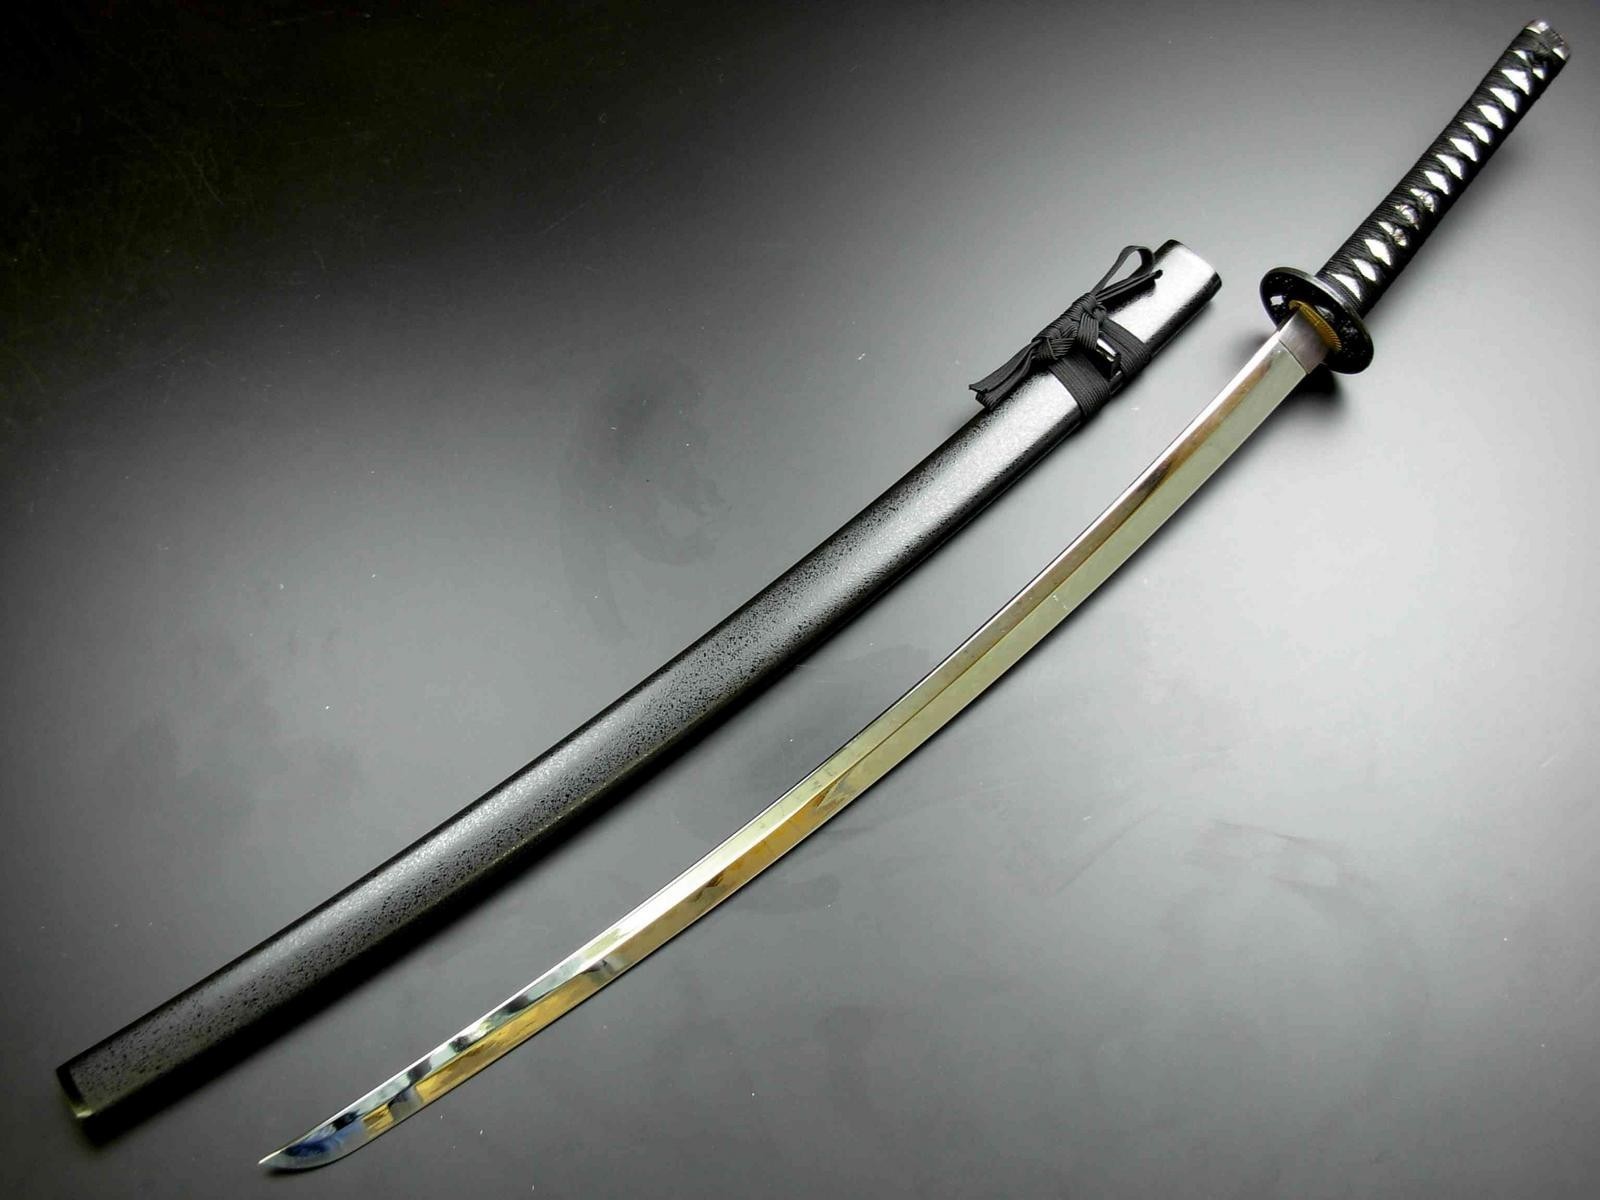 Amazing Samurai Sword Wallpaper Wide Is High Definition You